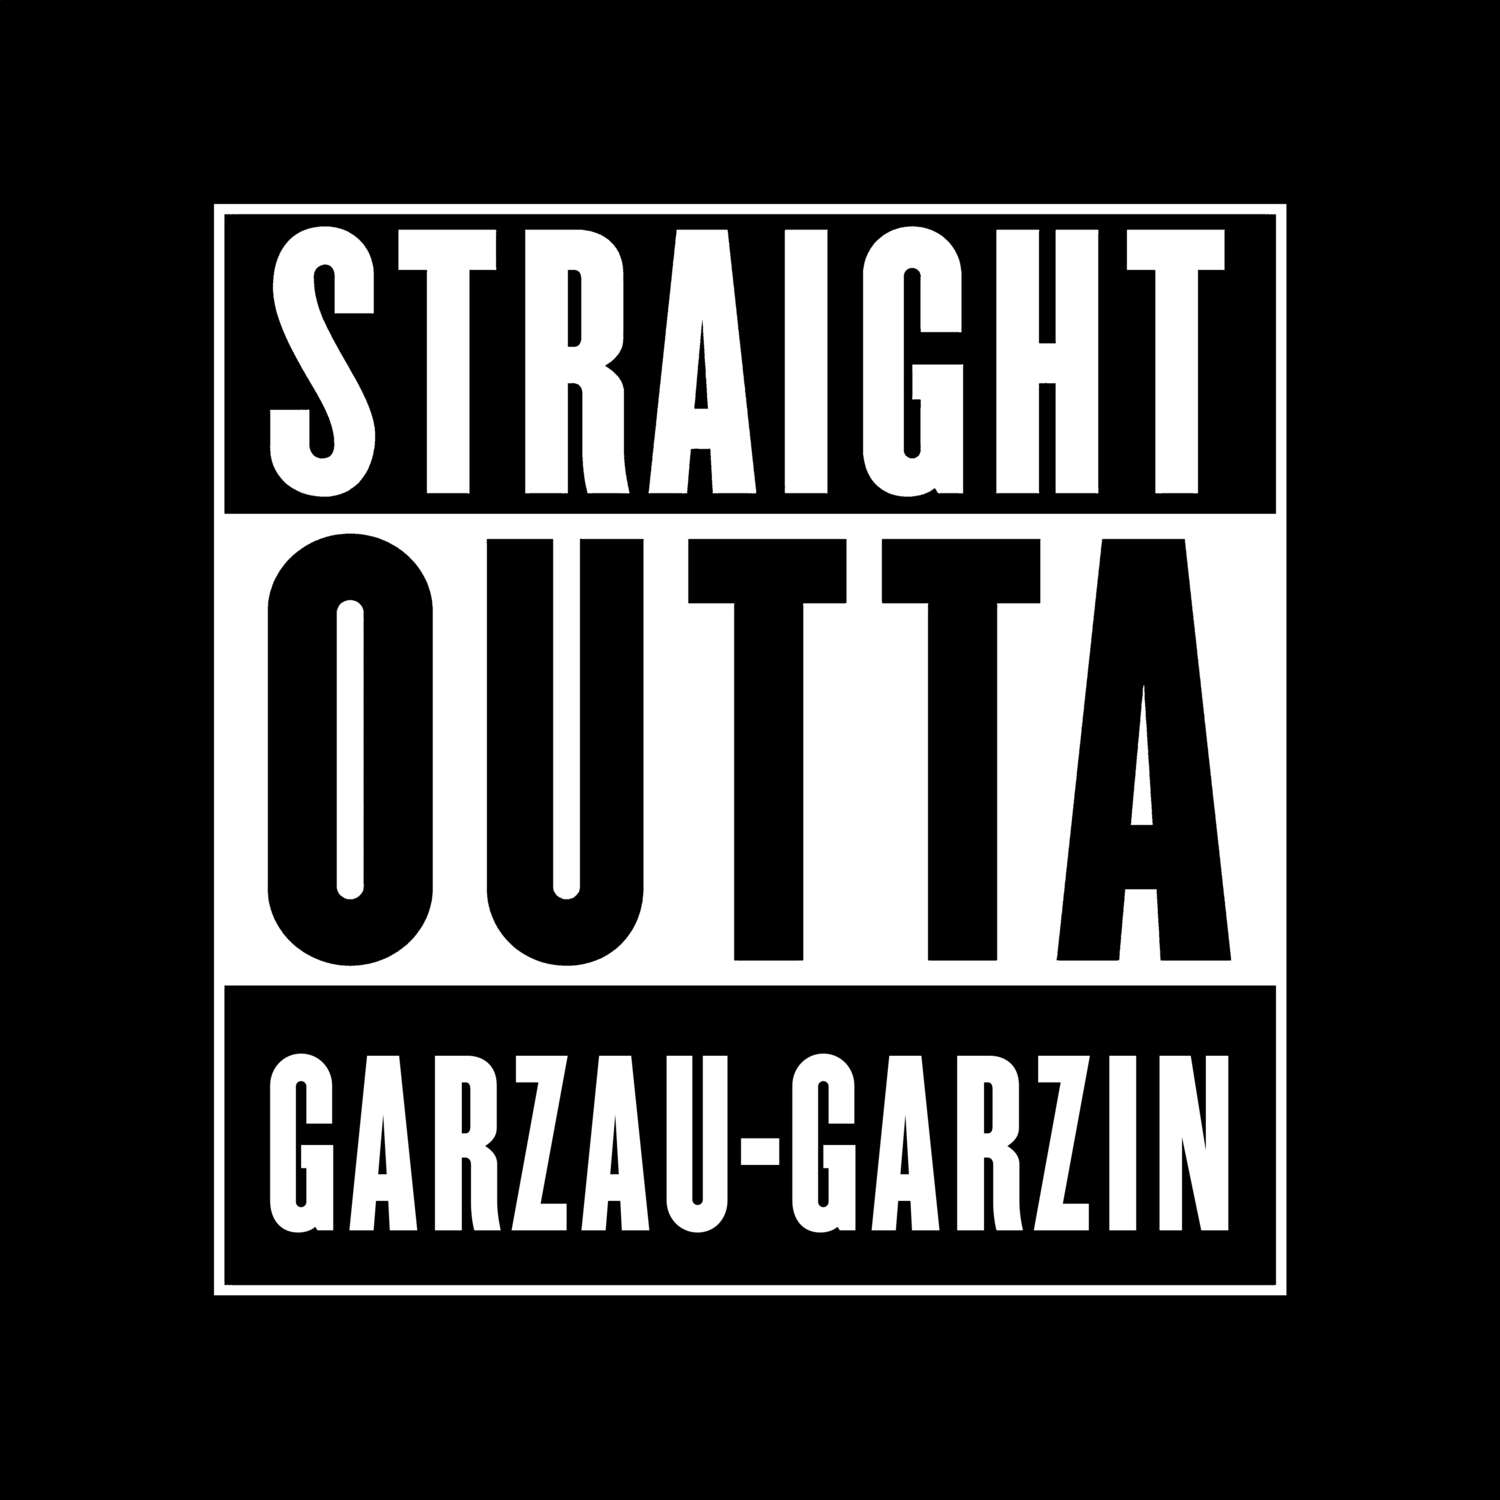 Garzau-Garzin T-Shirt »Straight Outta«